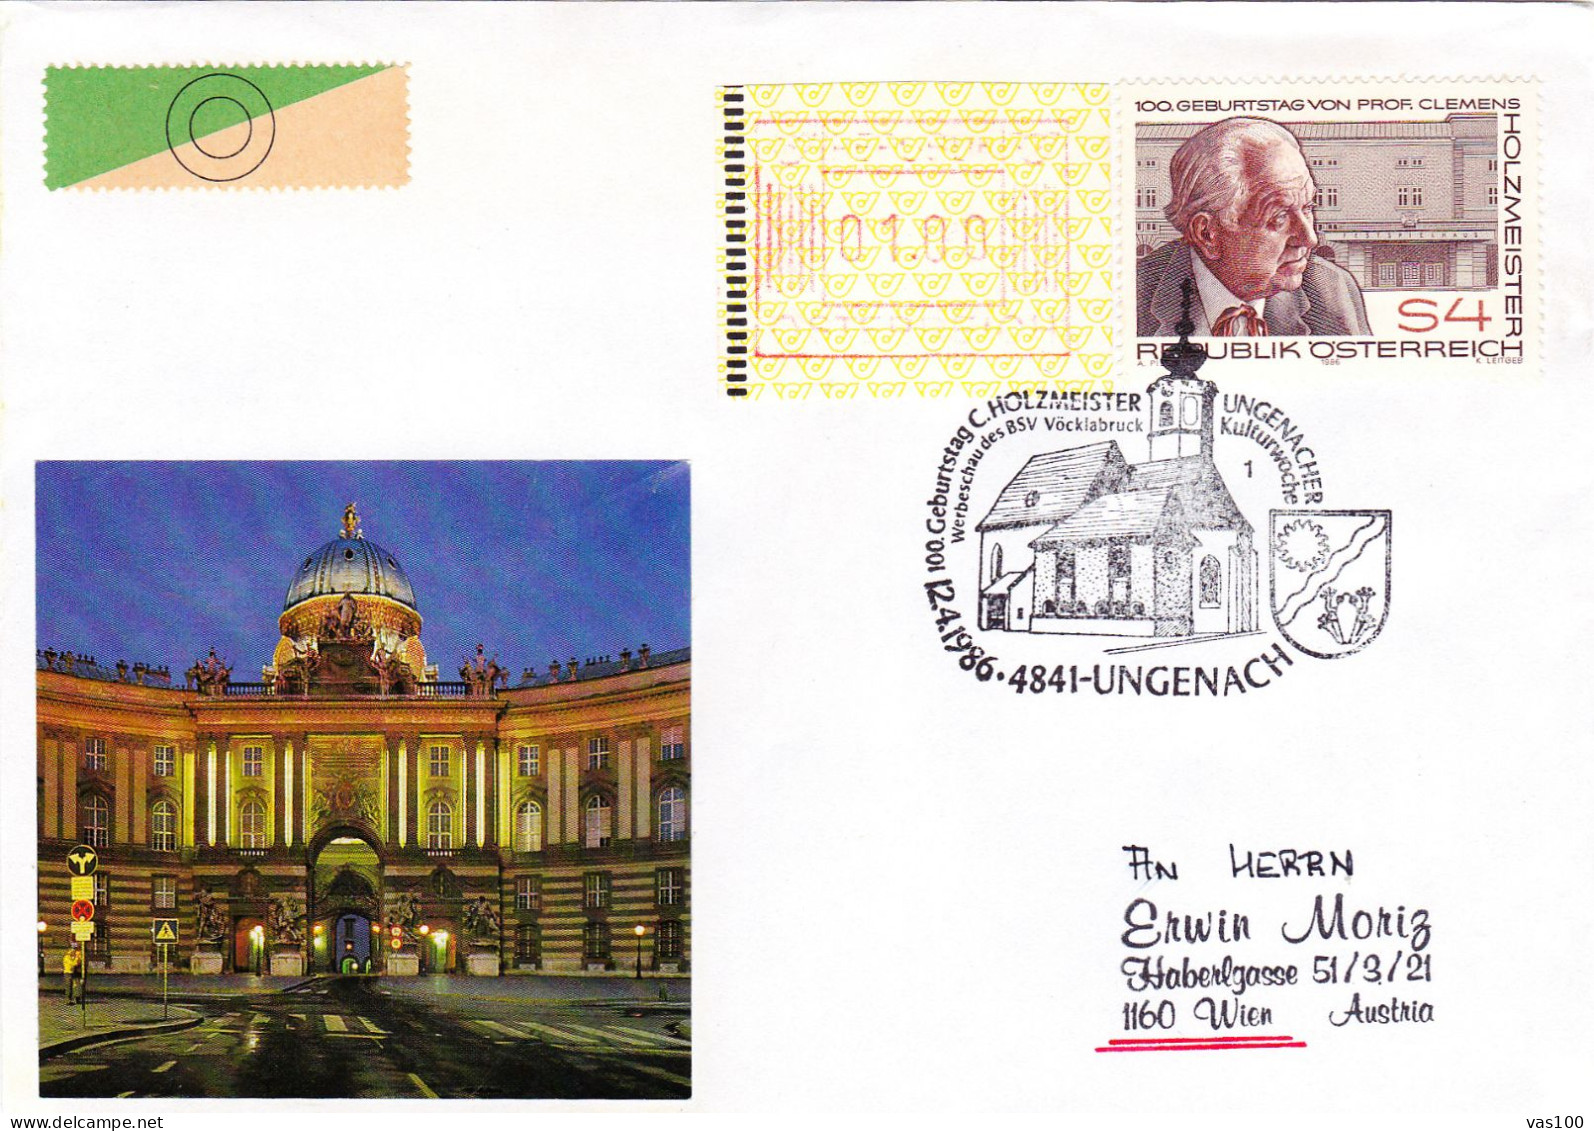 AUSTRIA POSTAL HISTORY / CHURCH UNGENACH,12.04.1986 - Lettres & Documents